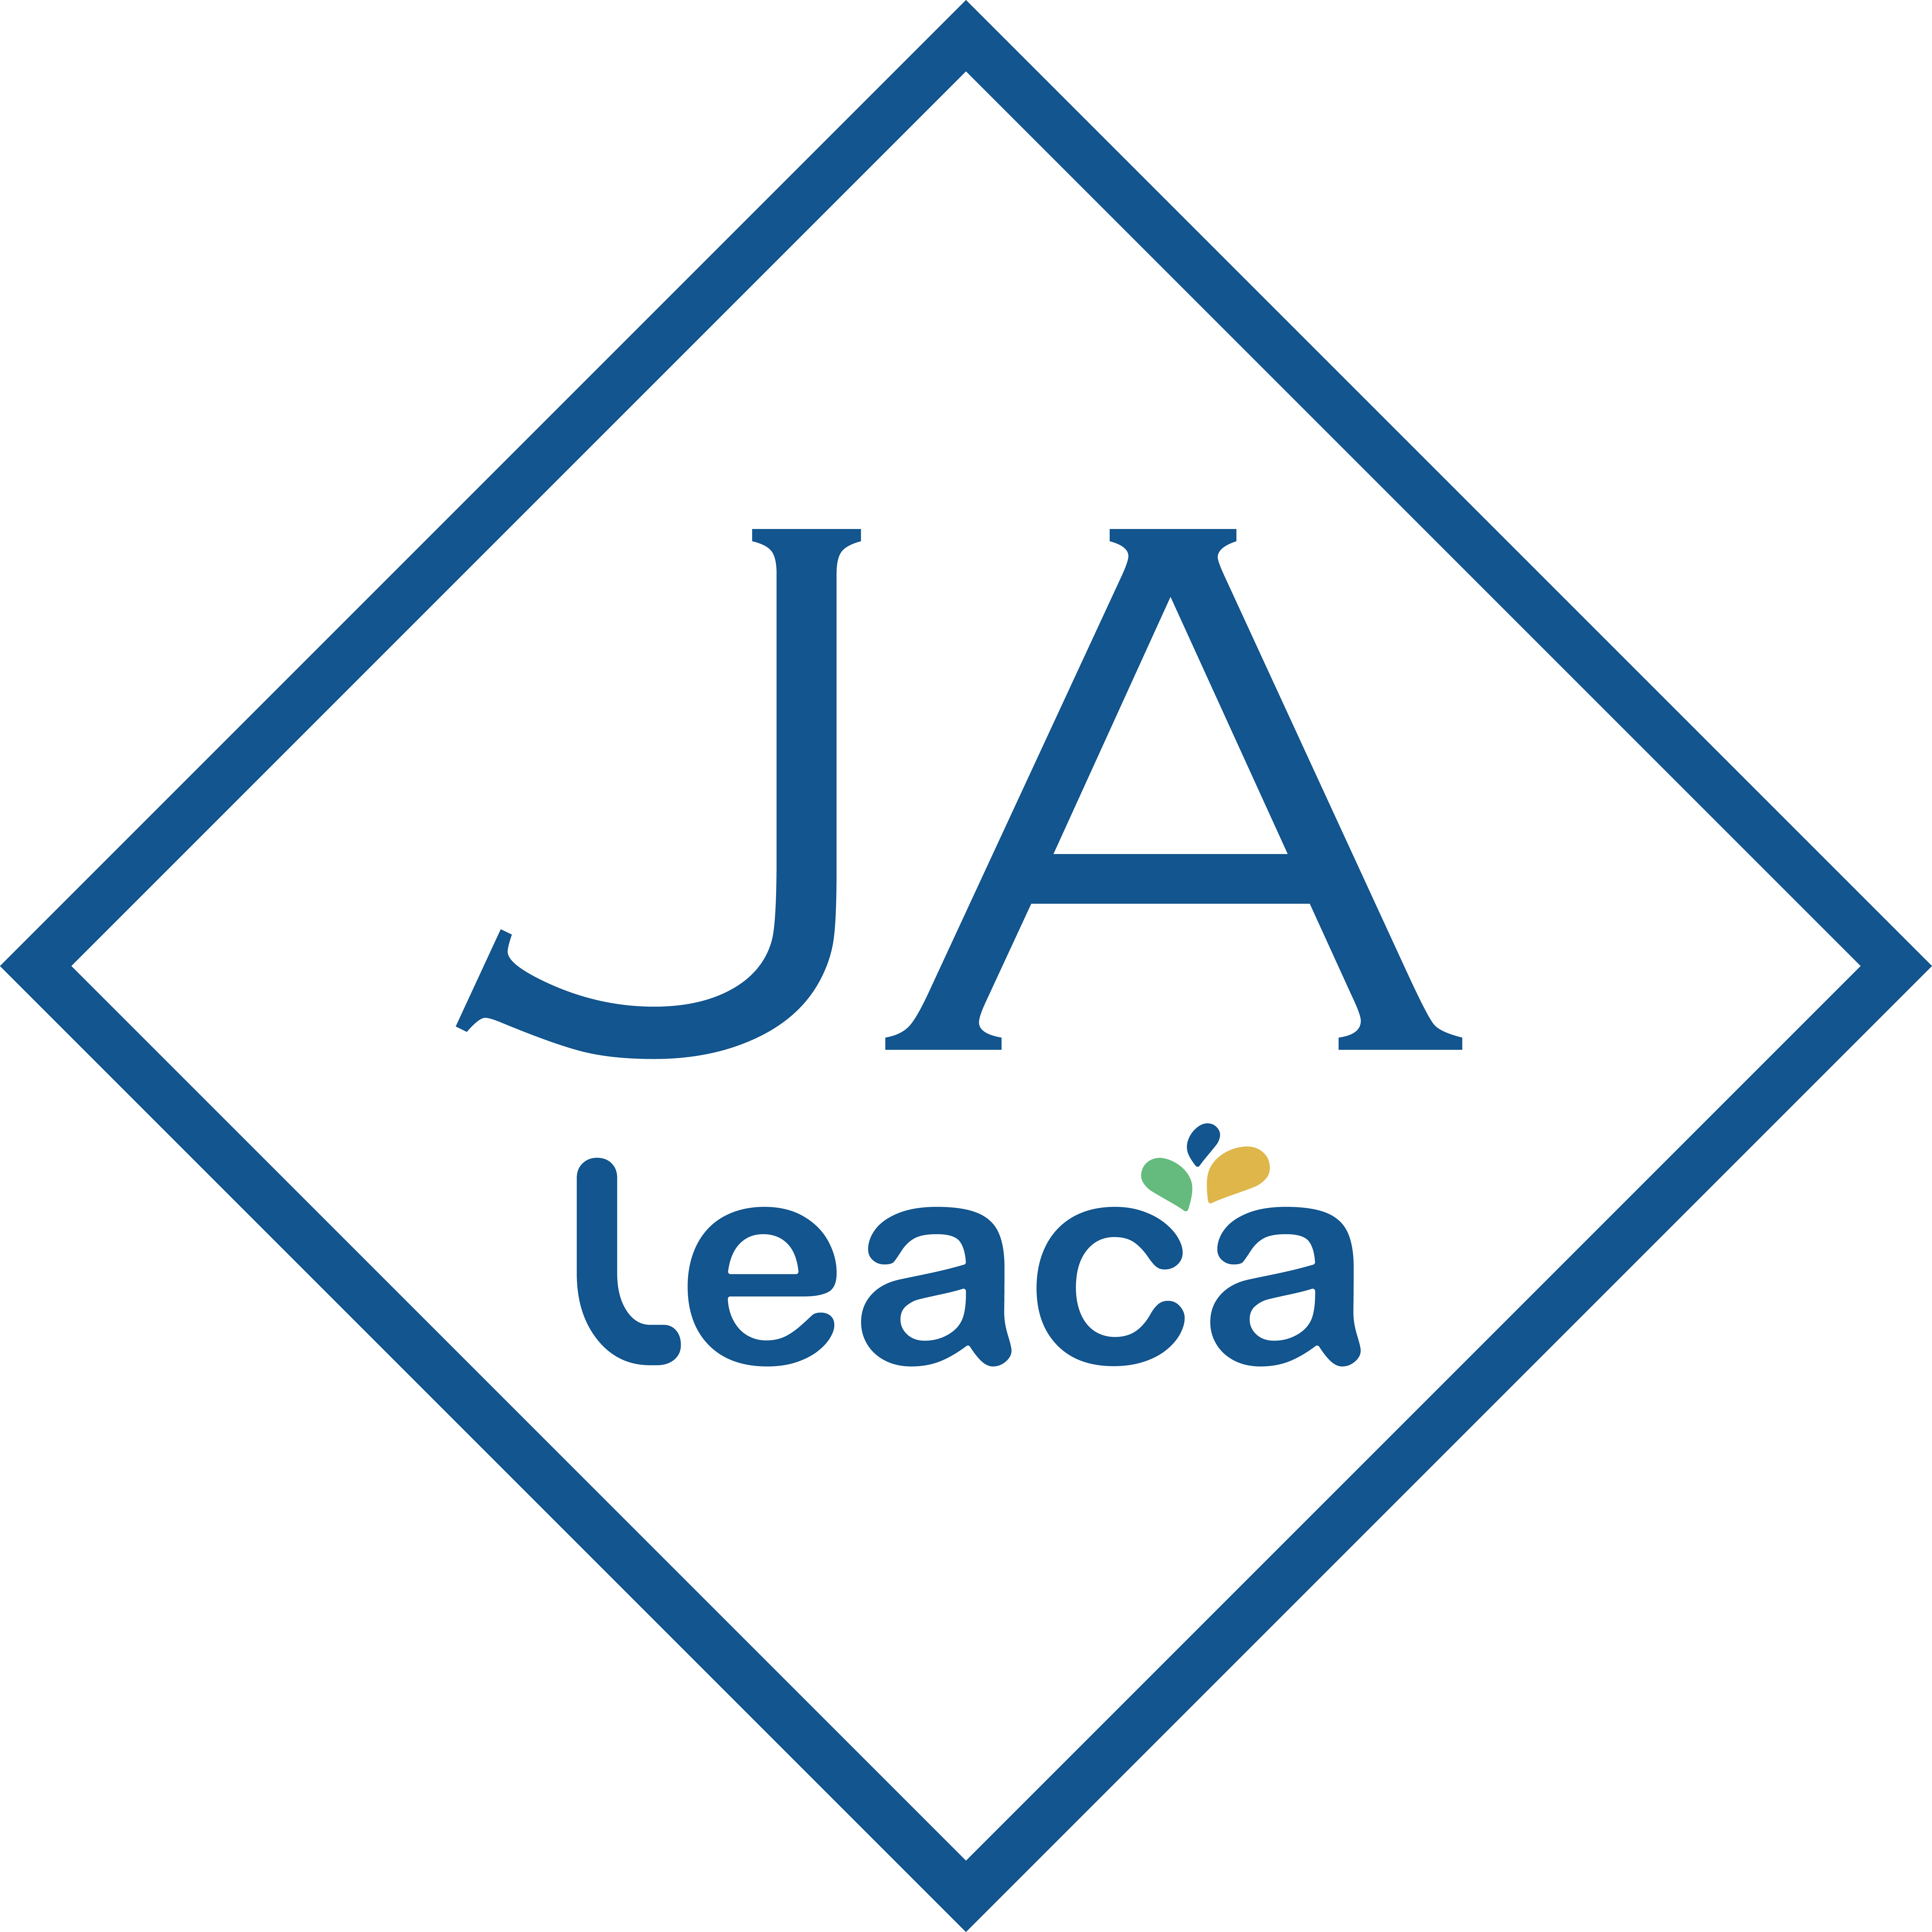 Logos-JA-Leaca.png